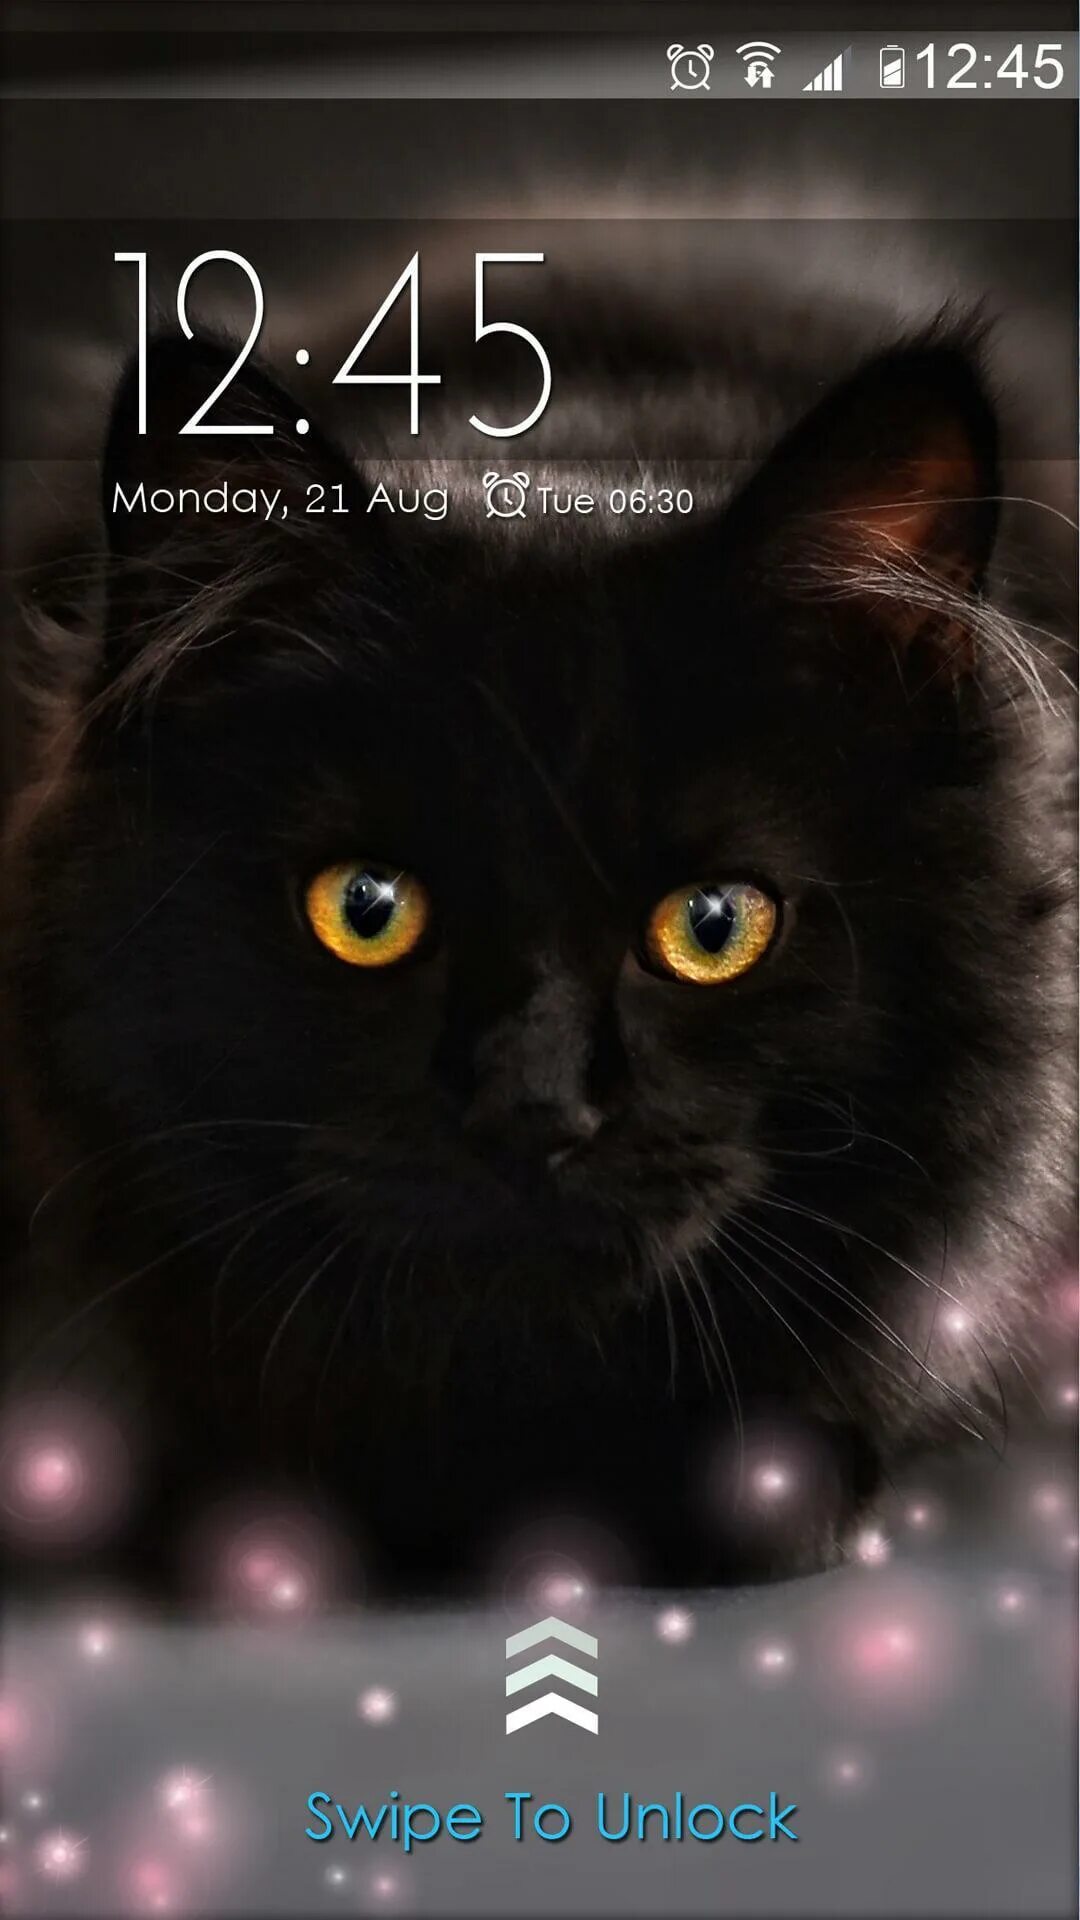 Котики на экран блокировки. Котик на экран блокировки экрана. Милые котики на экран блокировки. Котики на экран телефона.